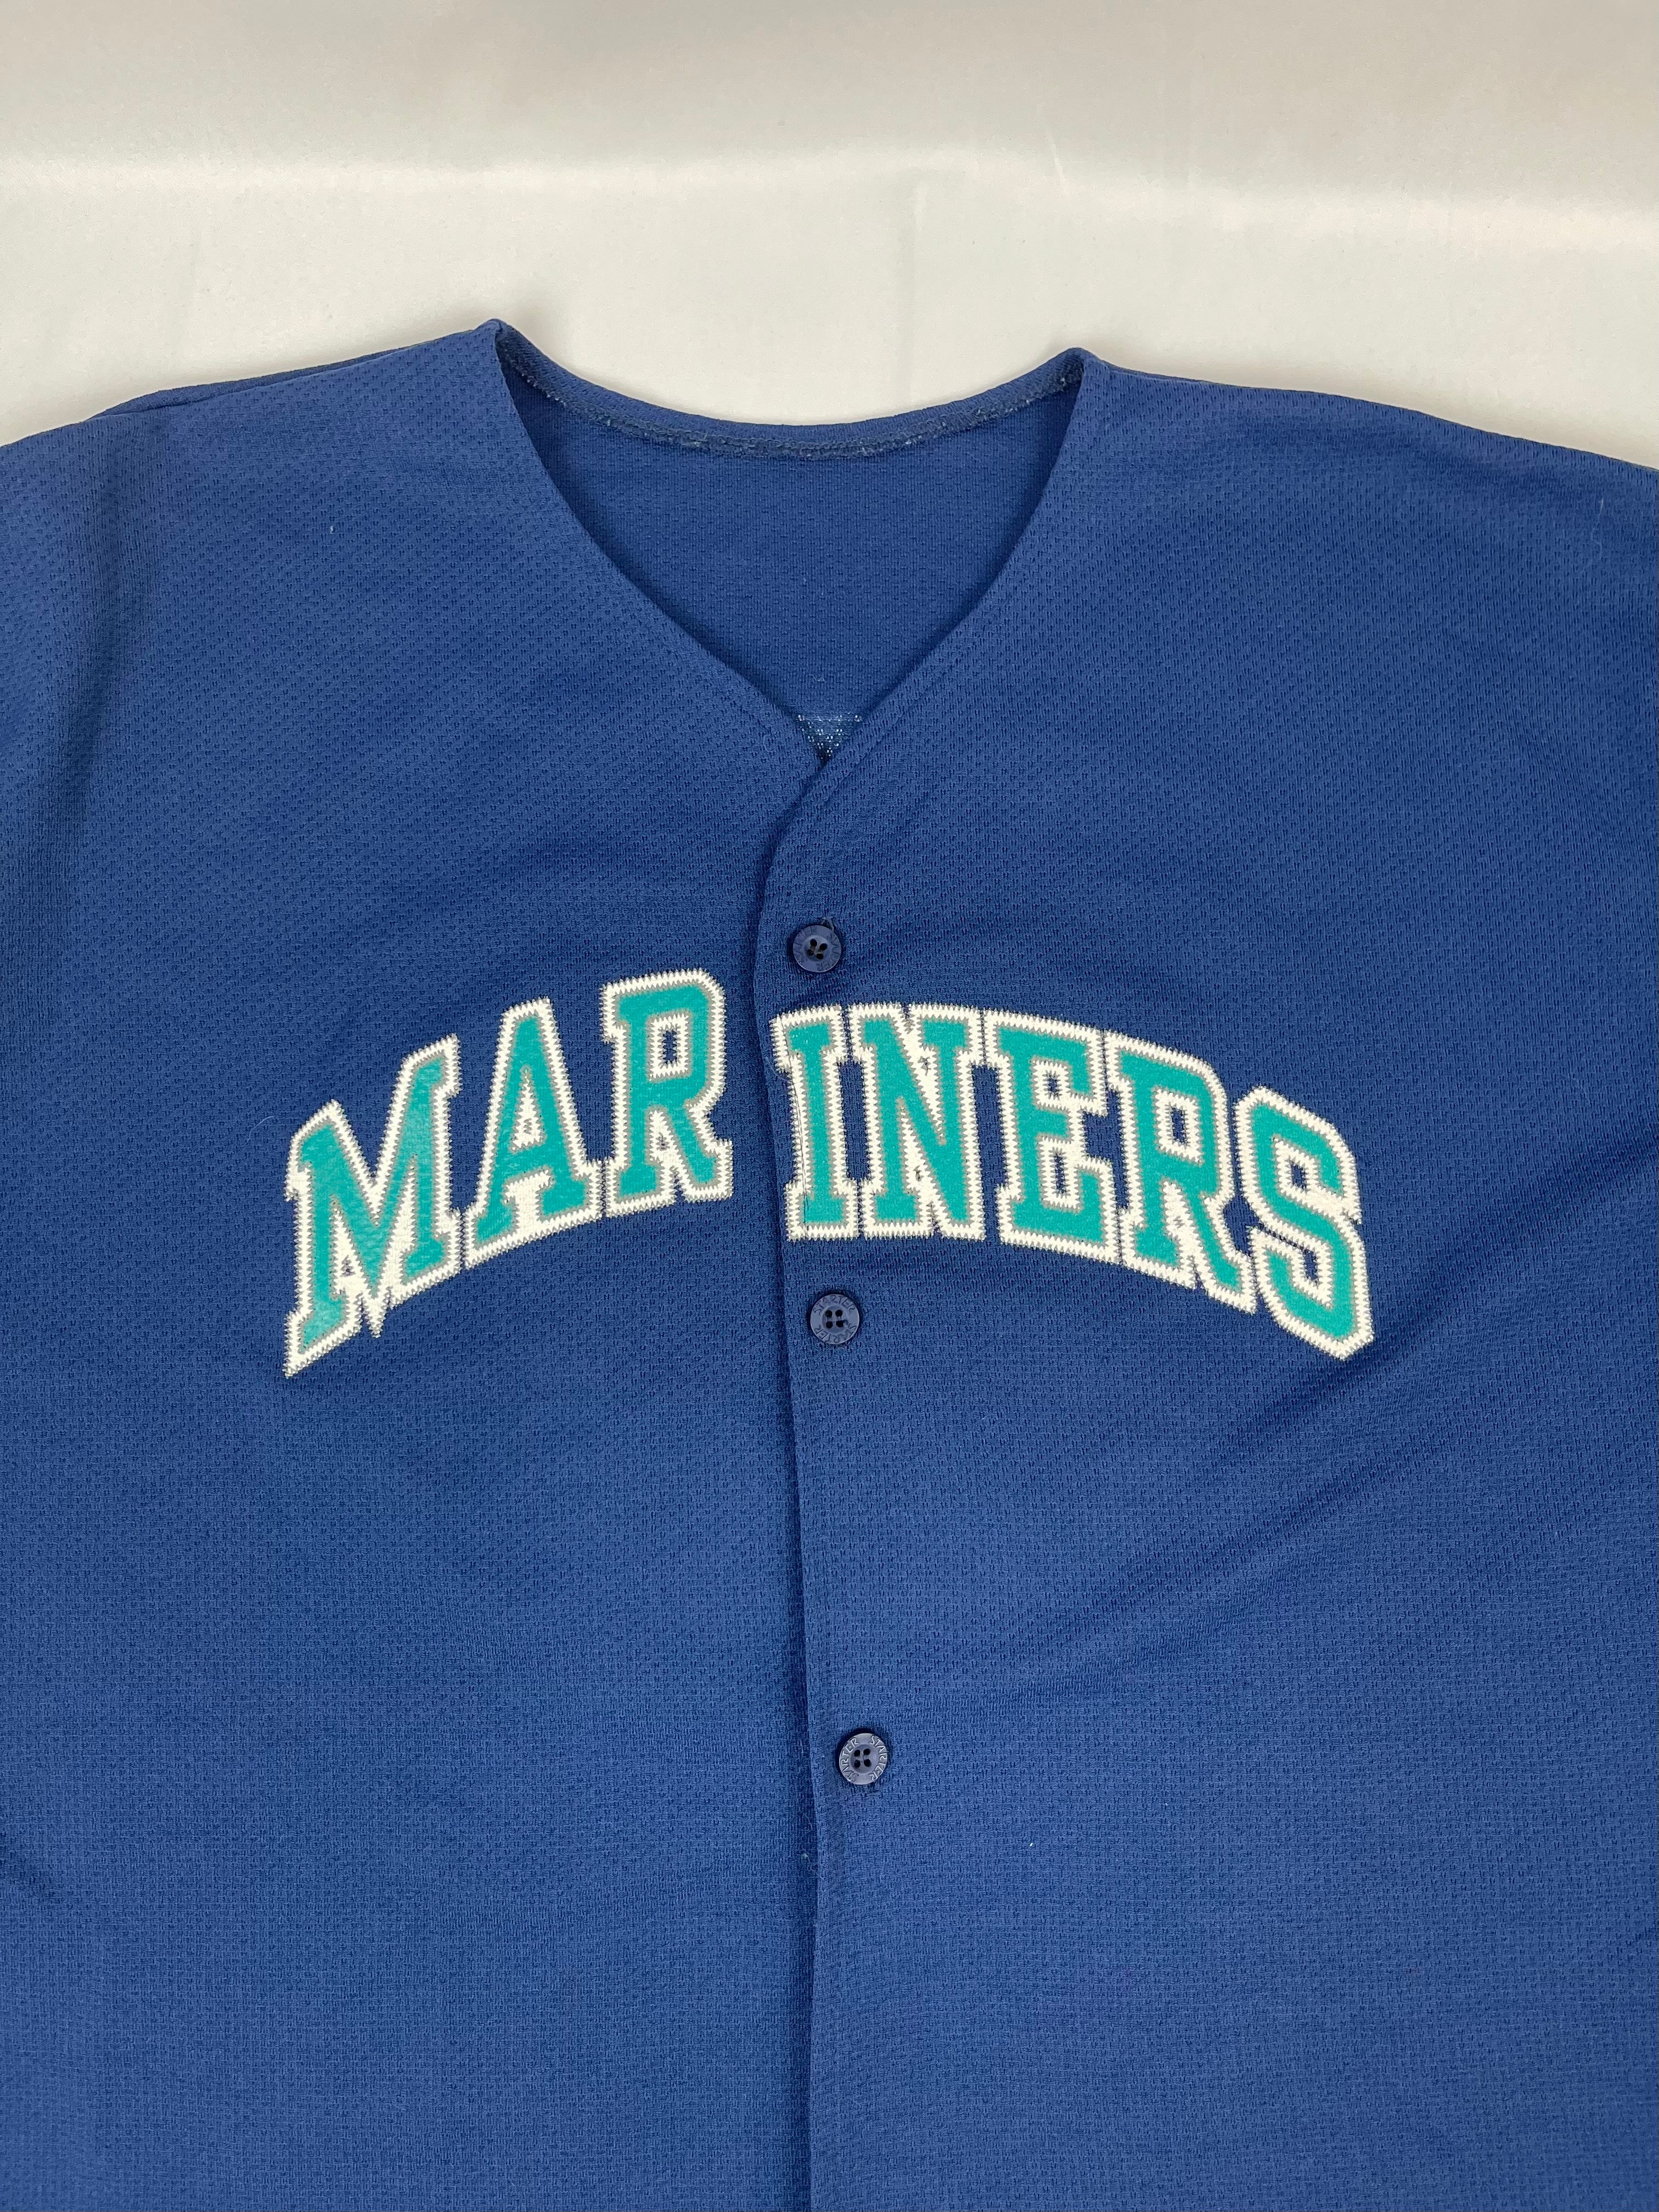 seattle mariners vintage jersey